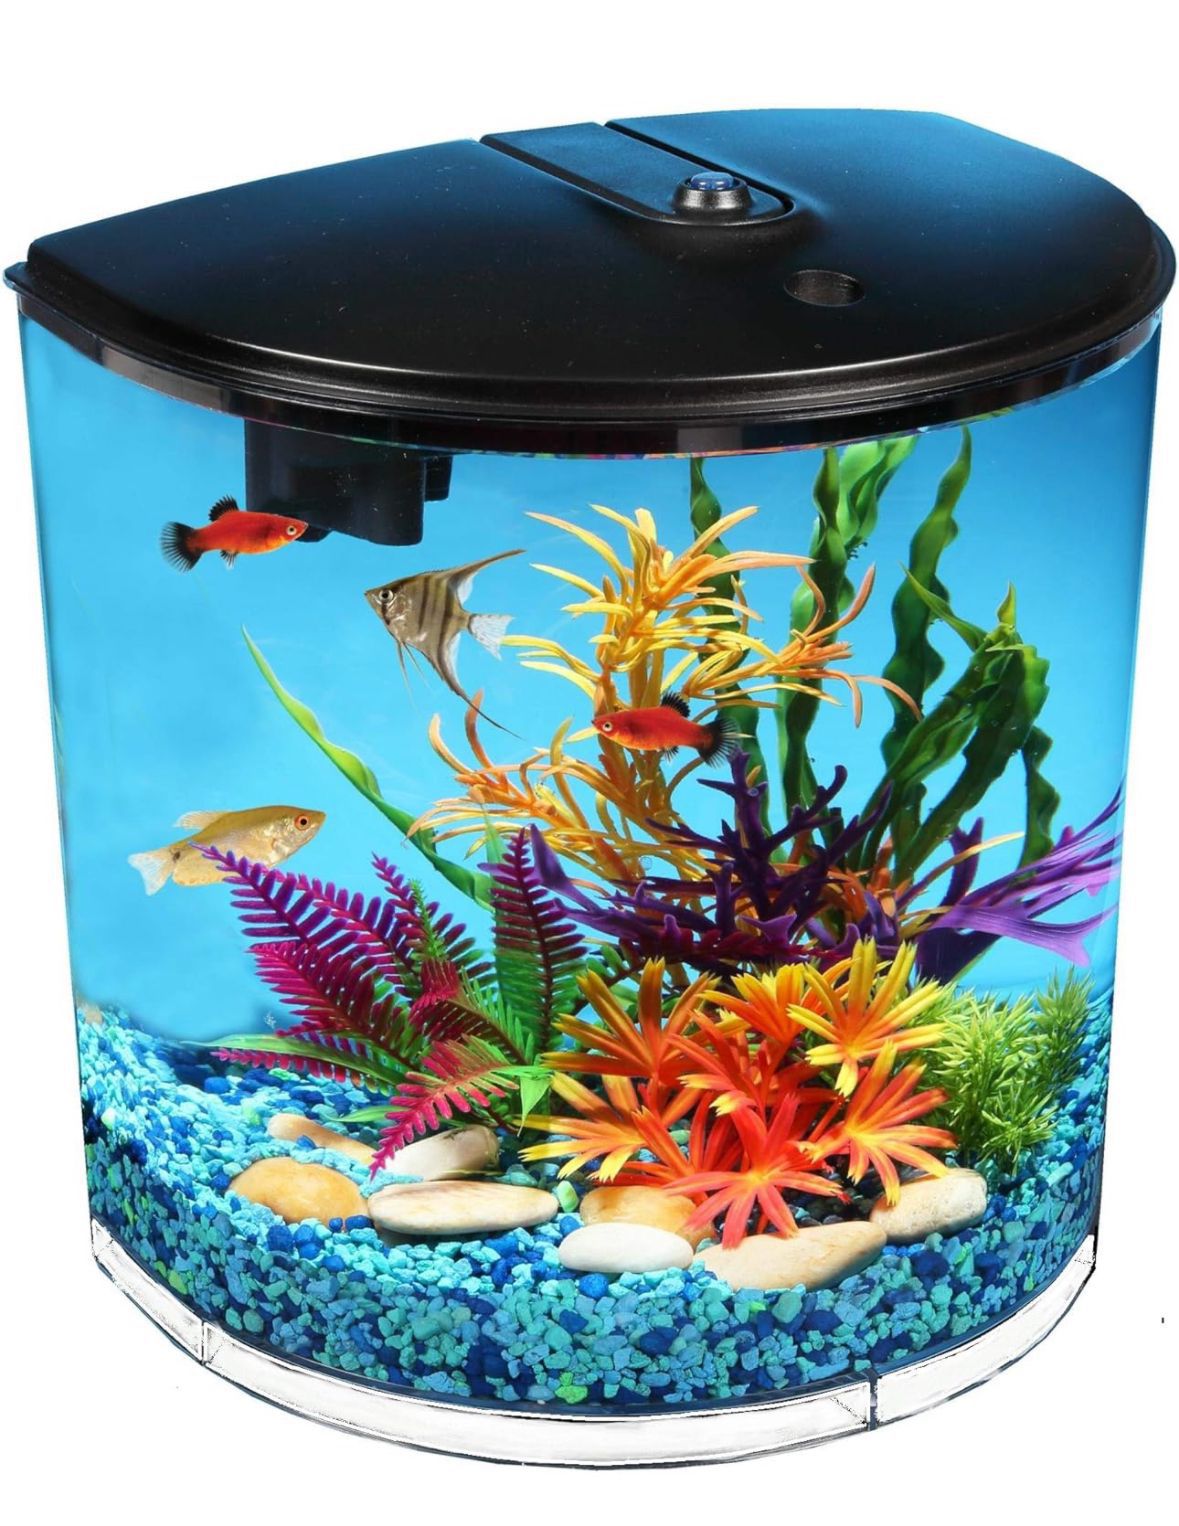 Aquarium Fish Tank 3.5 Gallon With Free Accessories Like New 